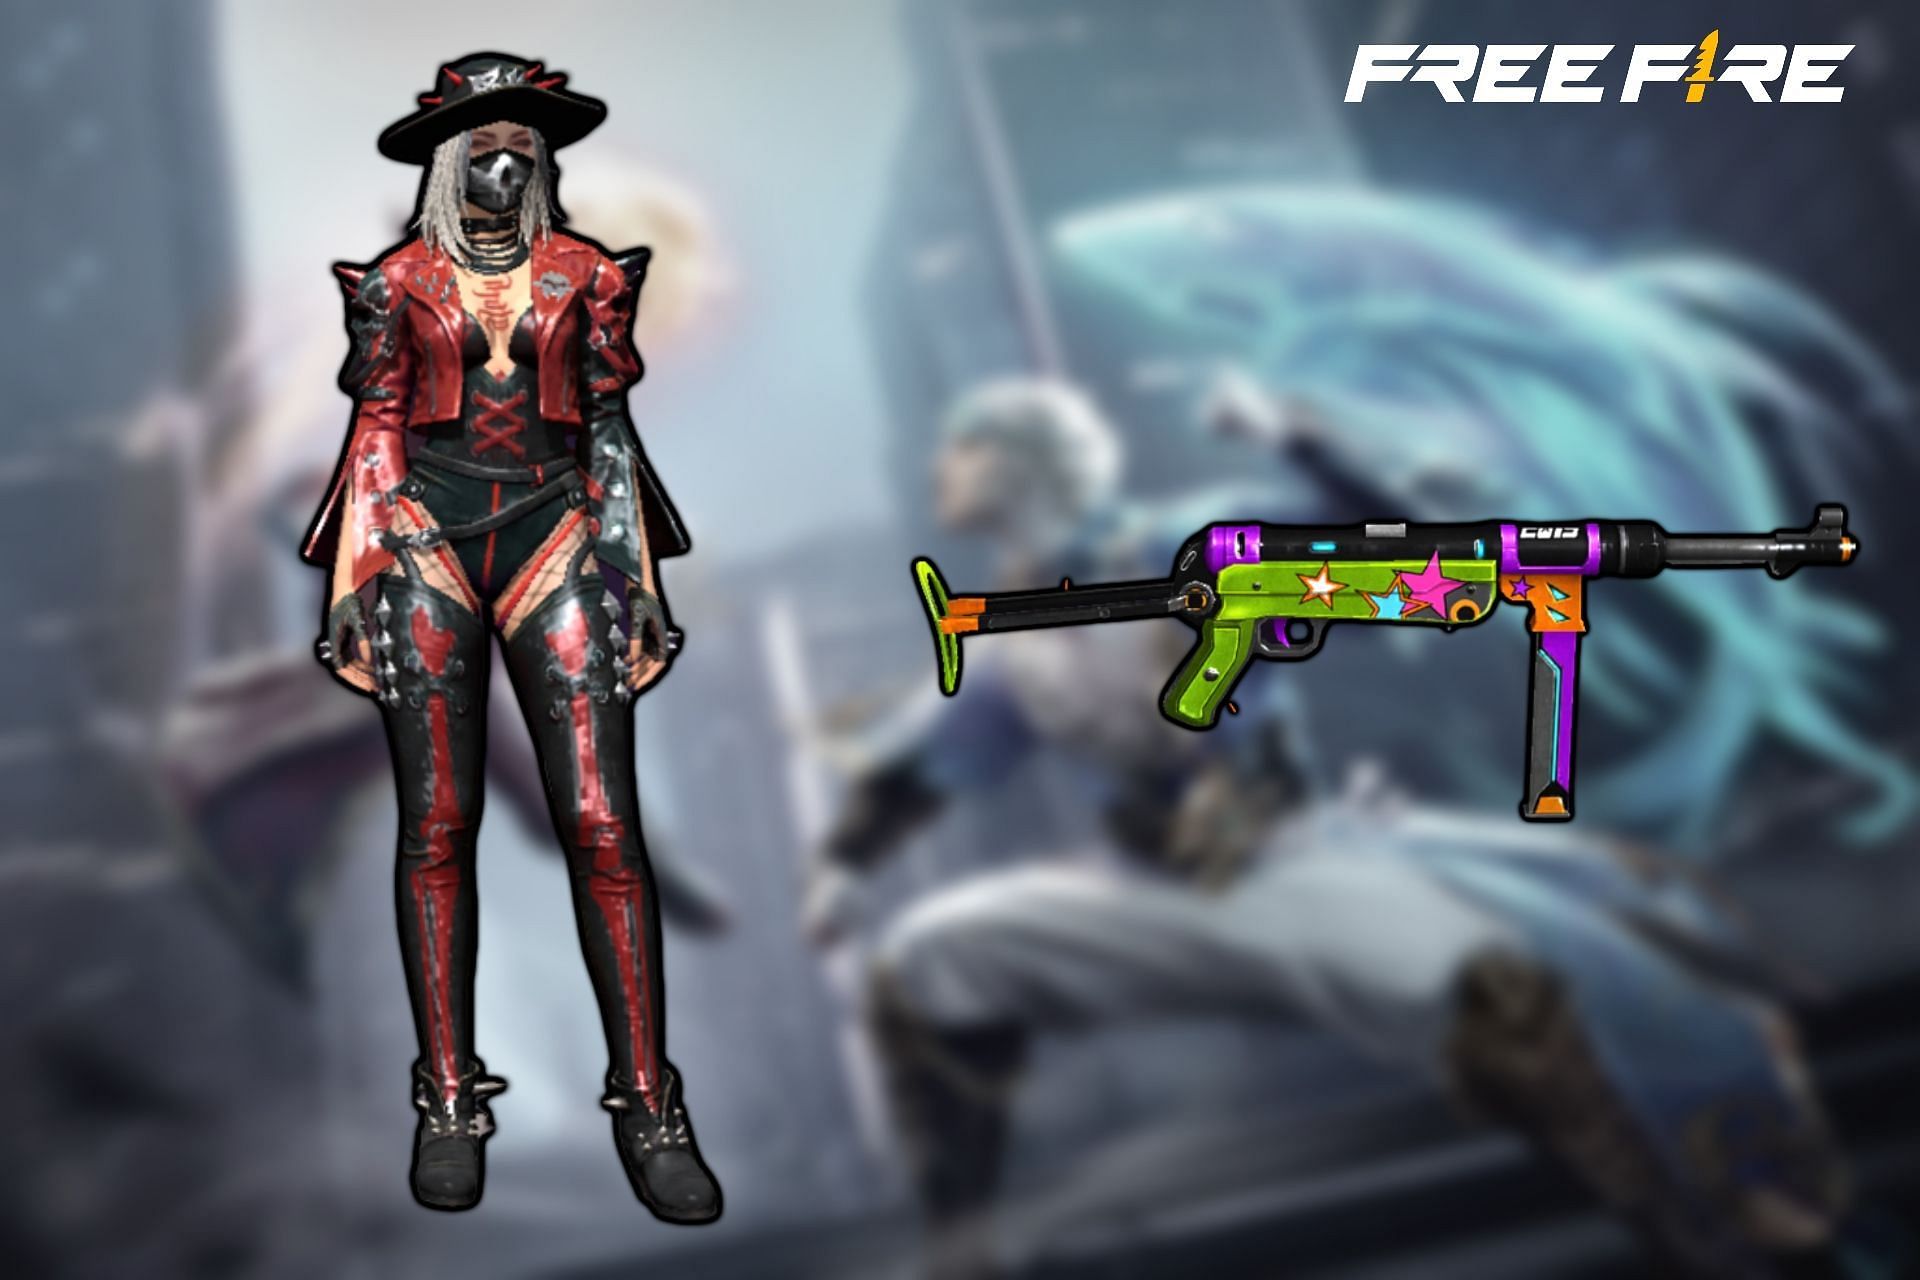 Users can receive costume bundles and gun skins by using Free Fire redeem codes (Image via Sportskeeda)